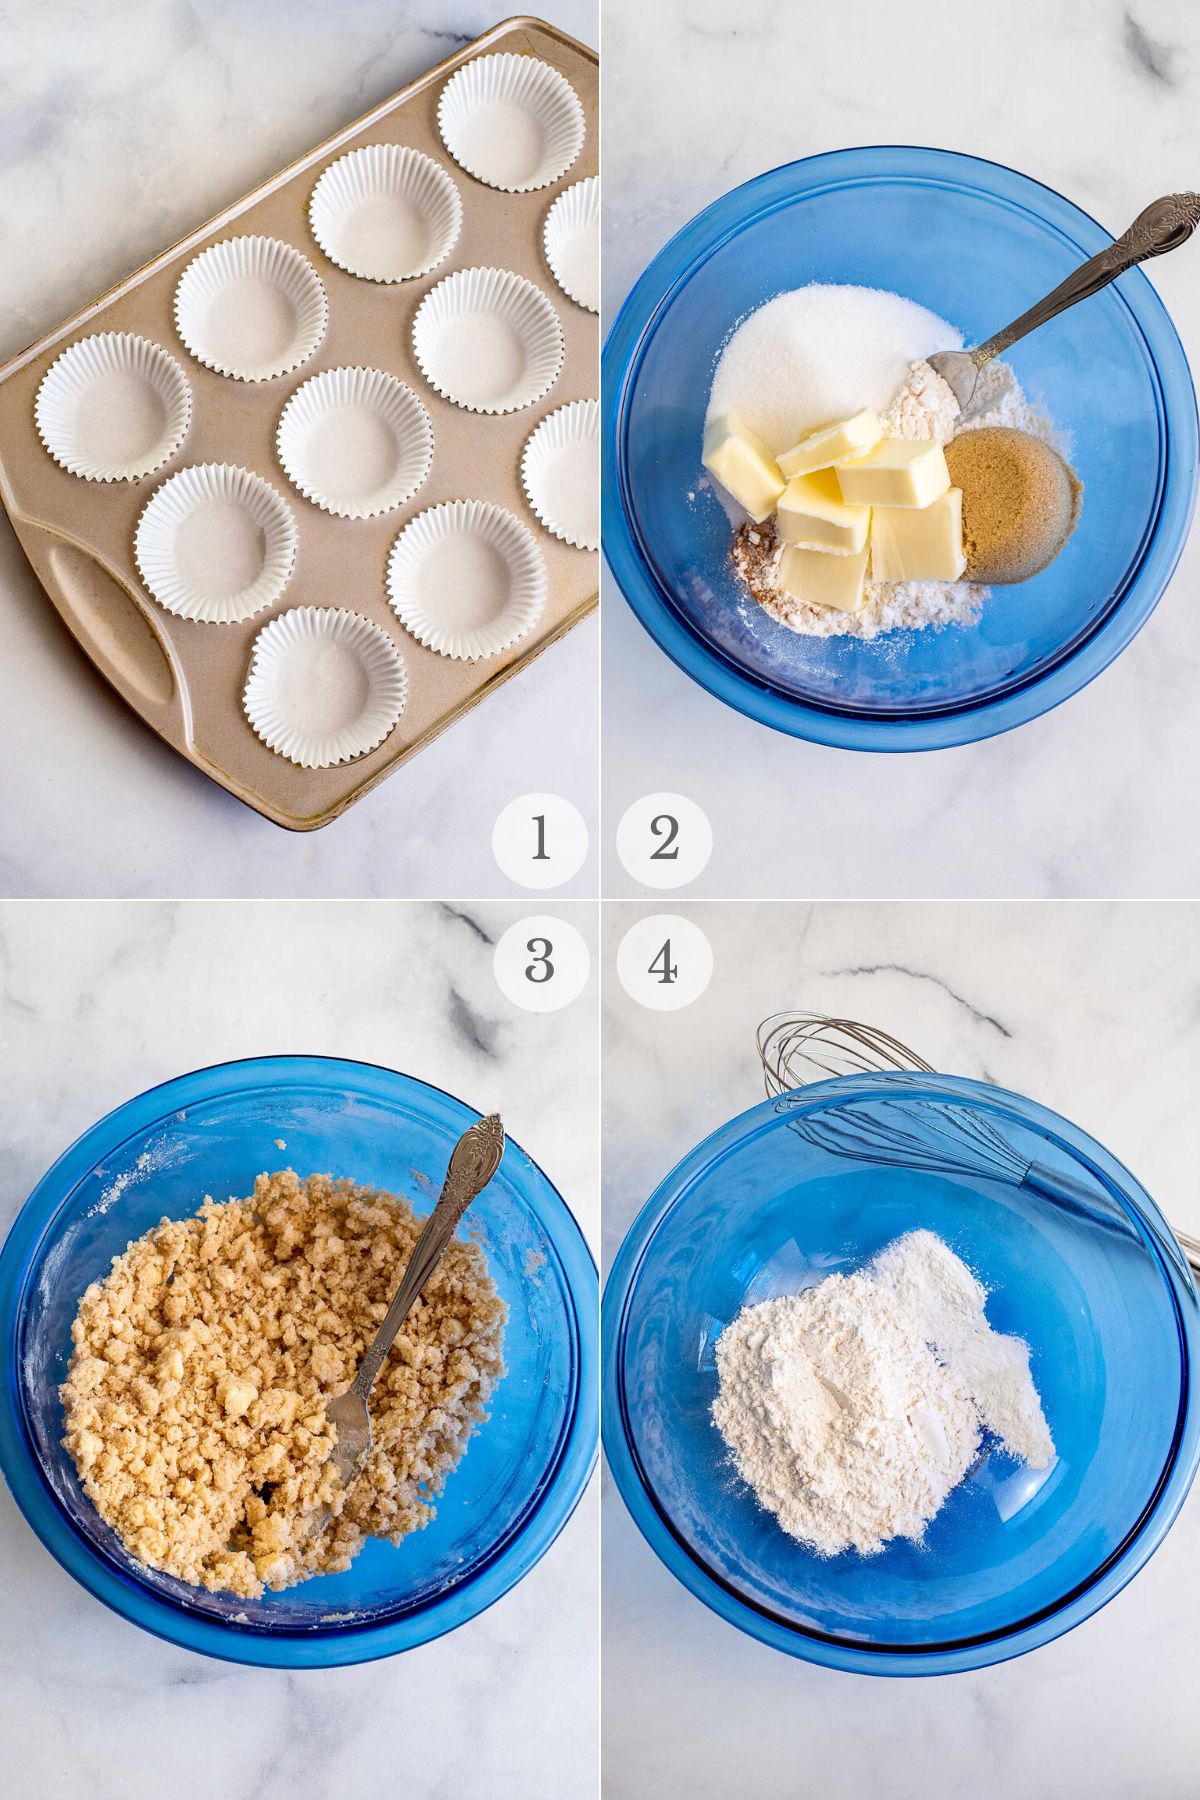 raspberry muffins recipe steps 1-4.